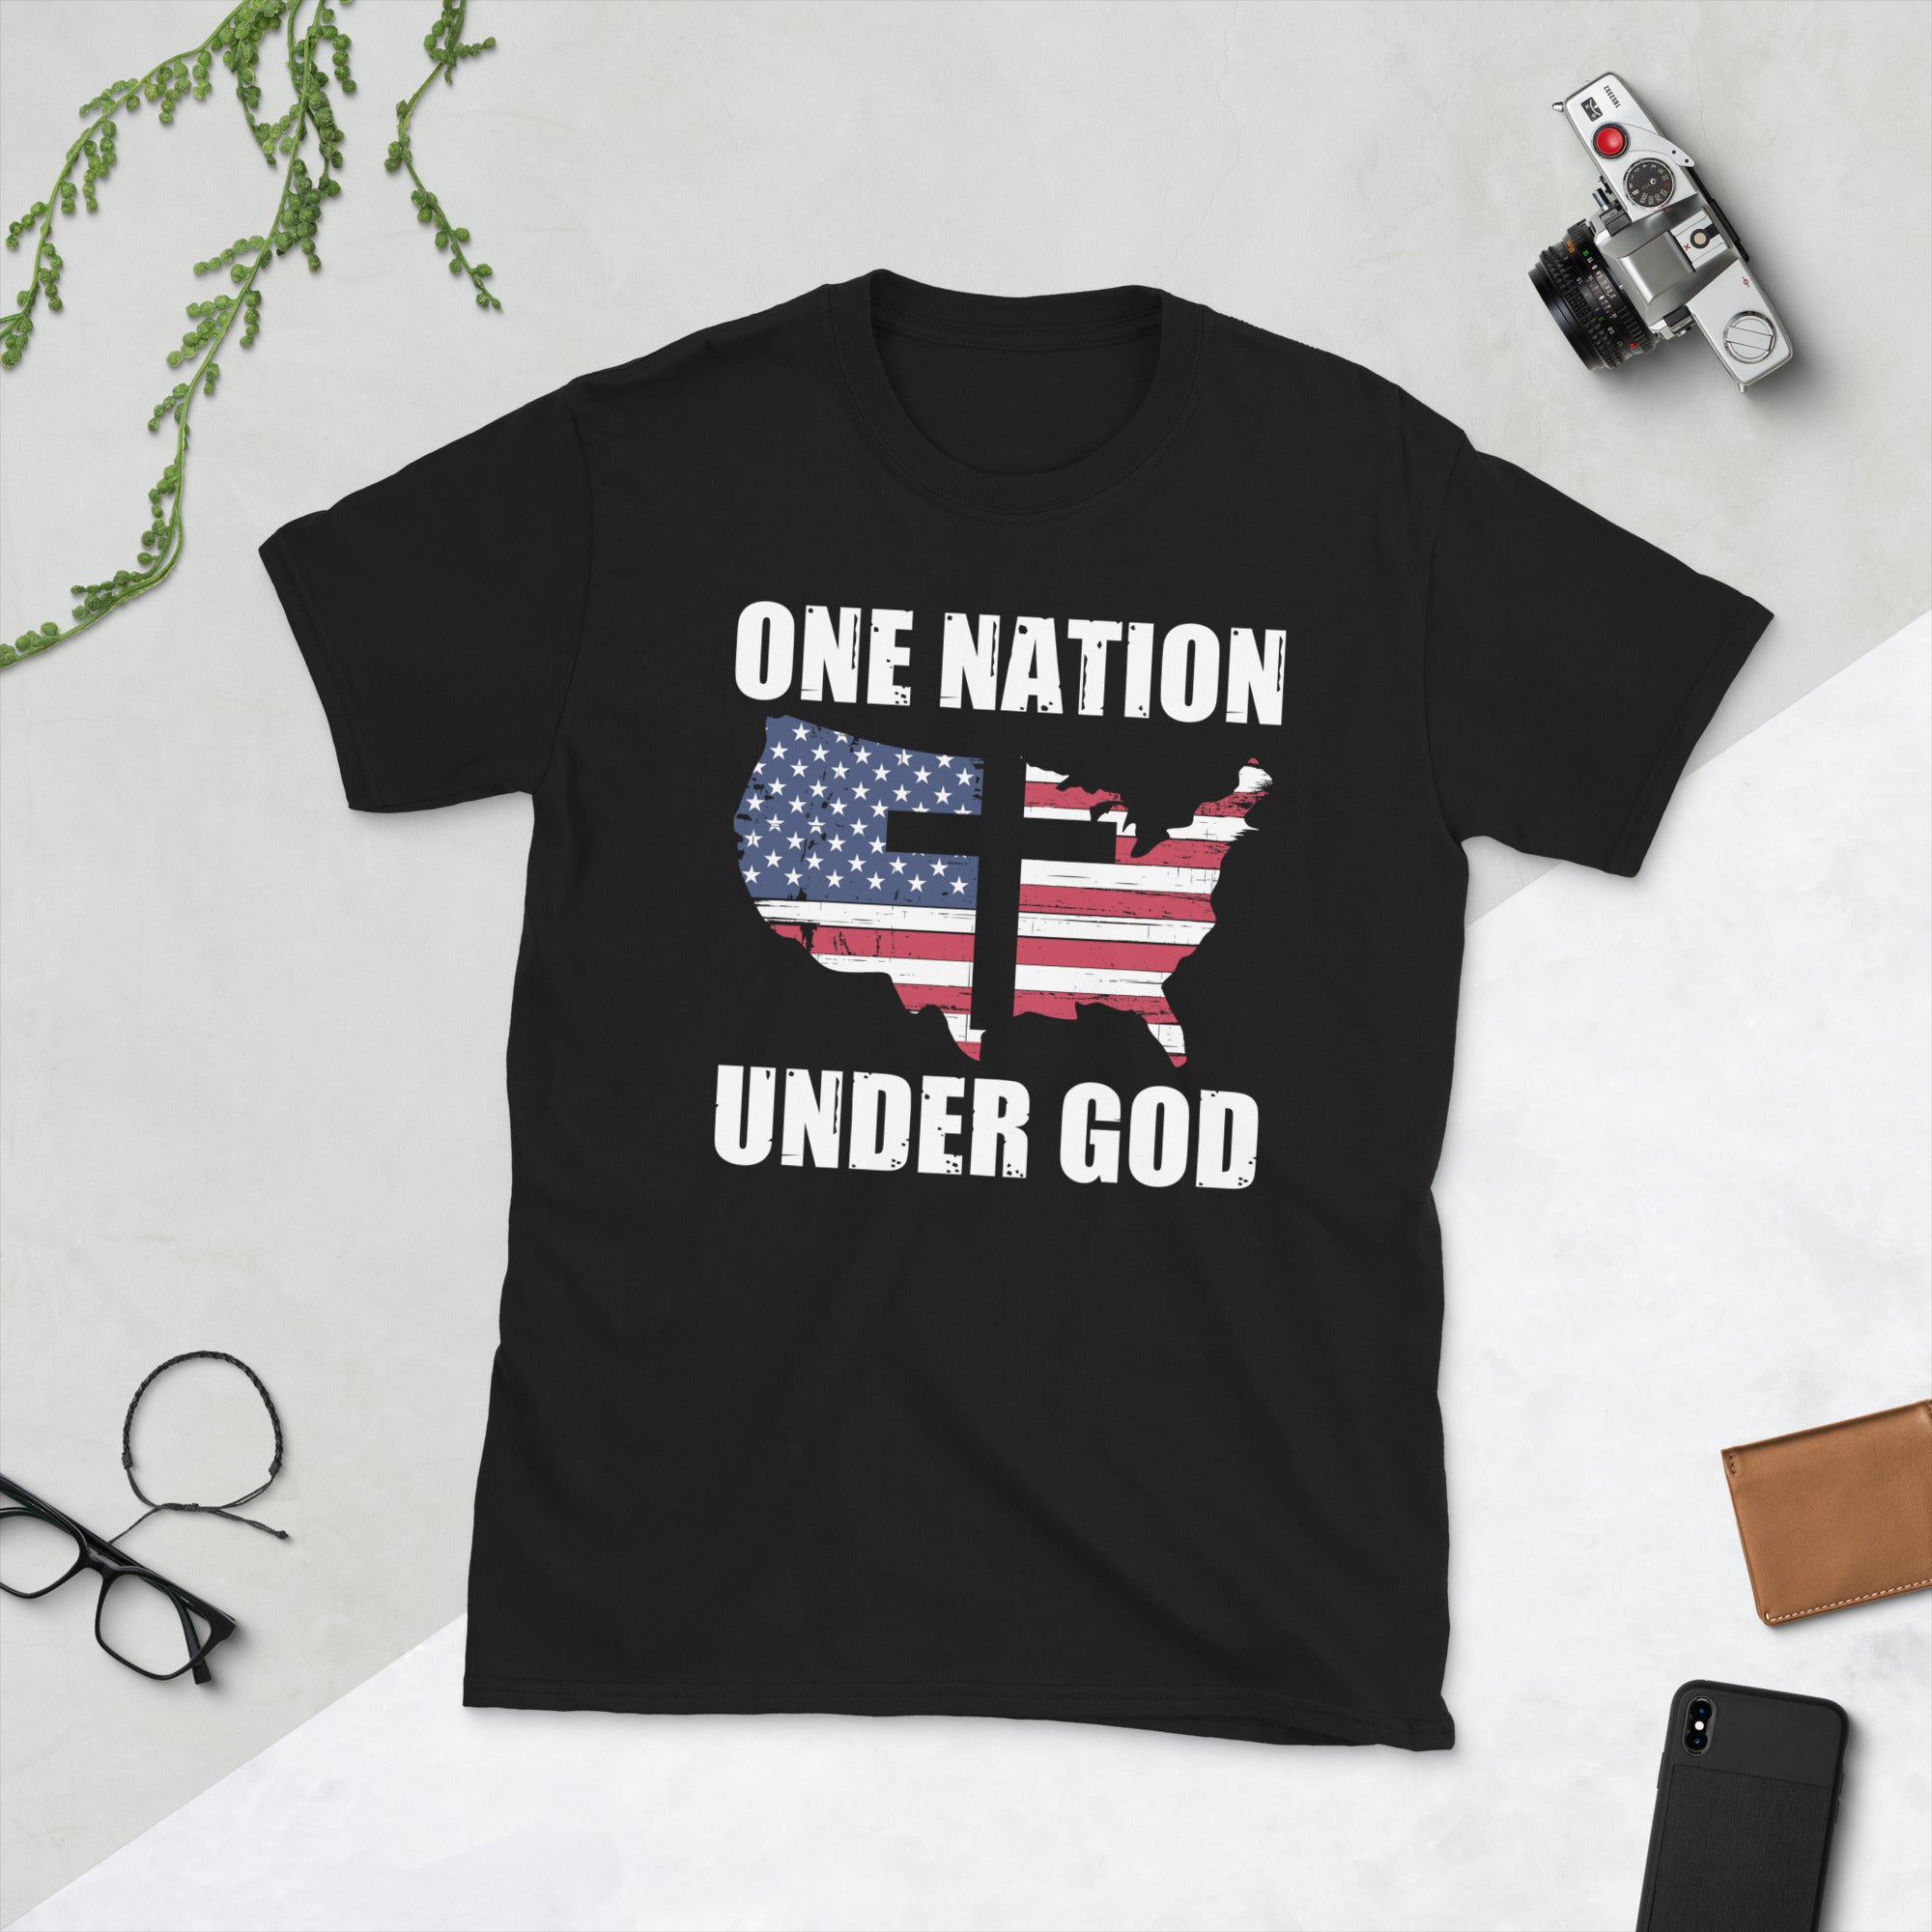 One Nation Under God Shirt, American Pride, Patriotic Gift, Freedom Shirt, USA Flag T Shirt, Pledge of Allegiance, Patriot Shirt, USA Cross